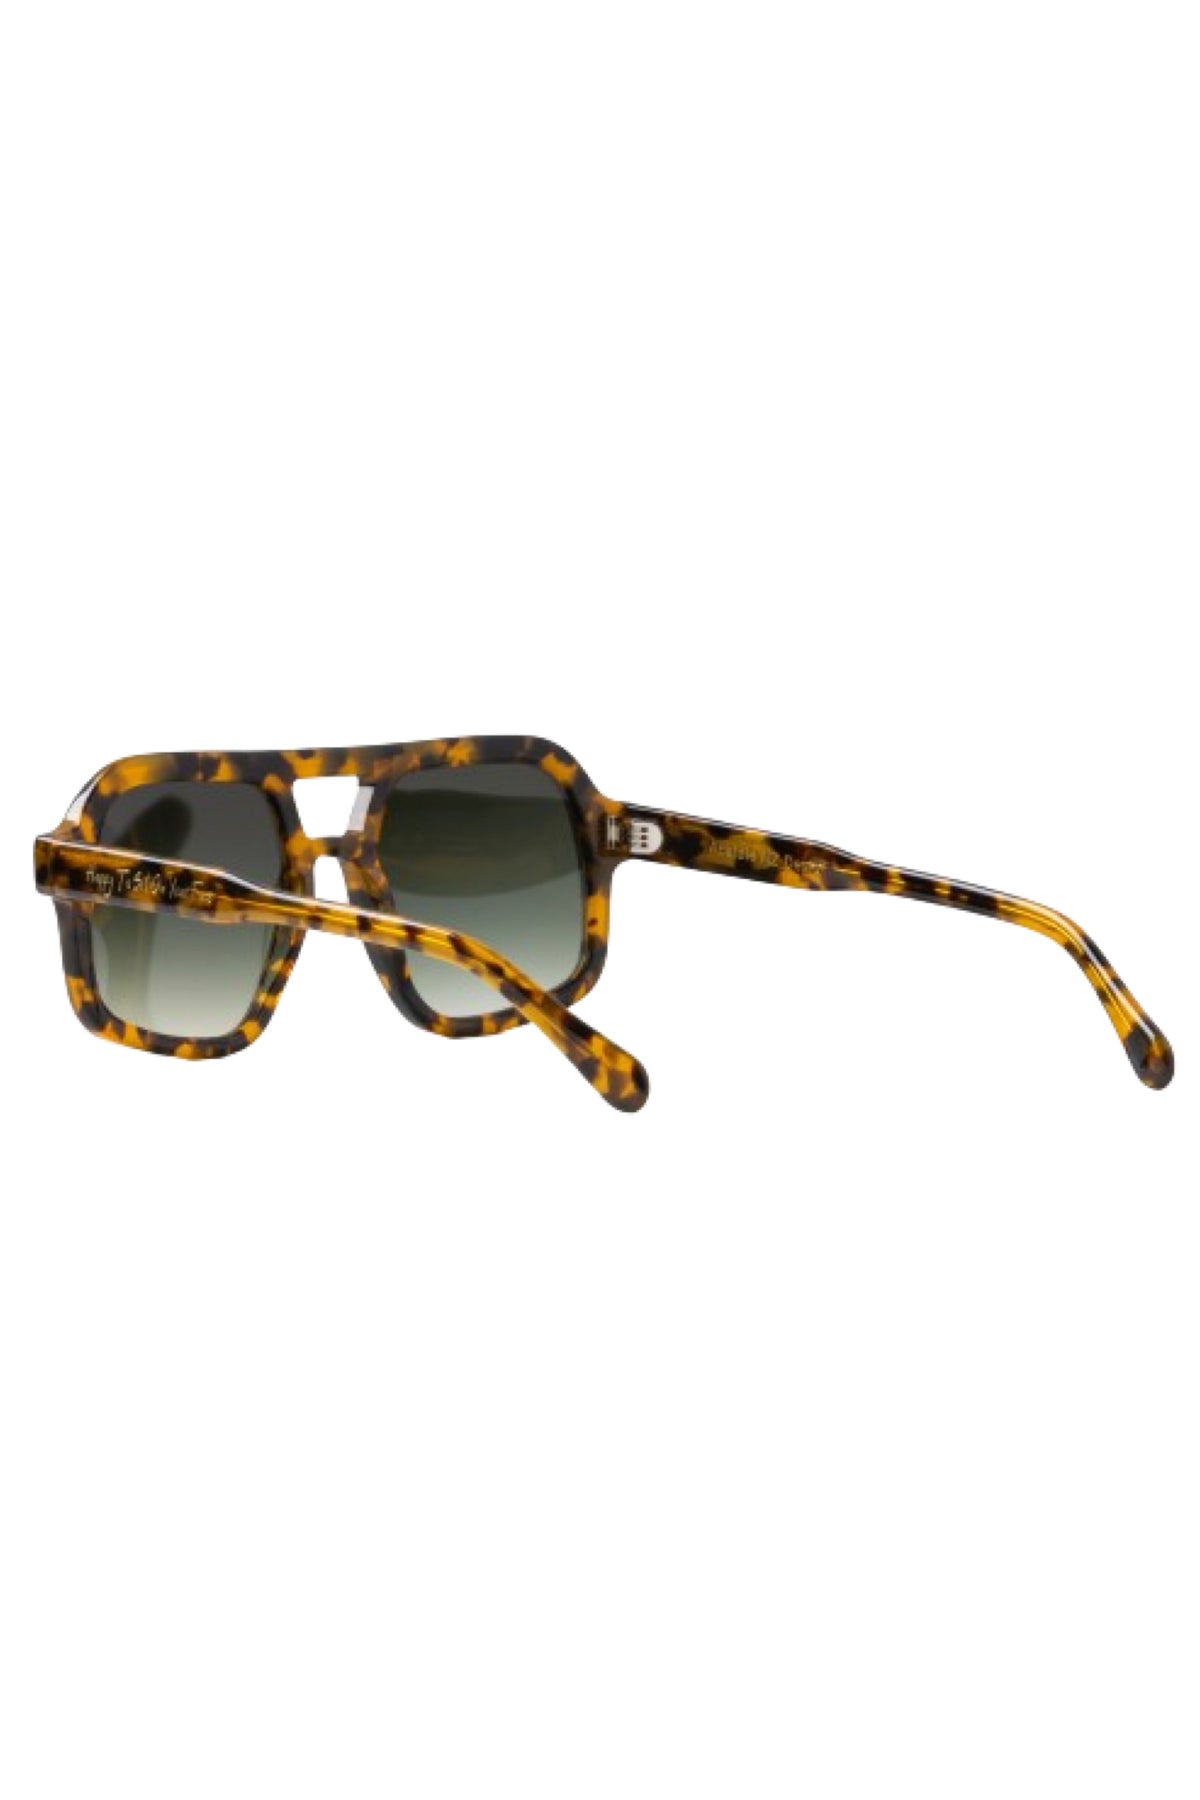 Candy Dust Tortoiseshell Sunglasses